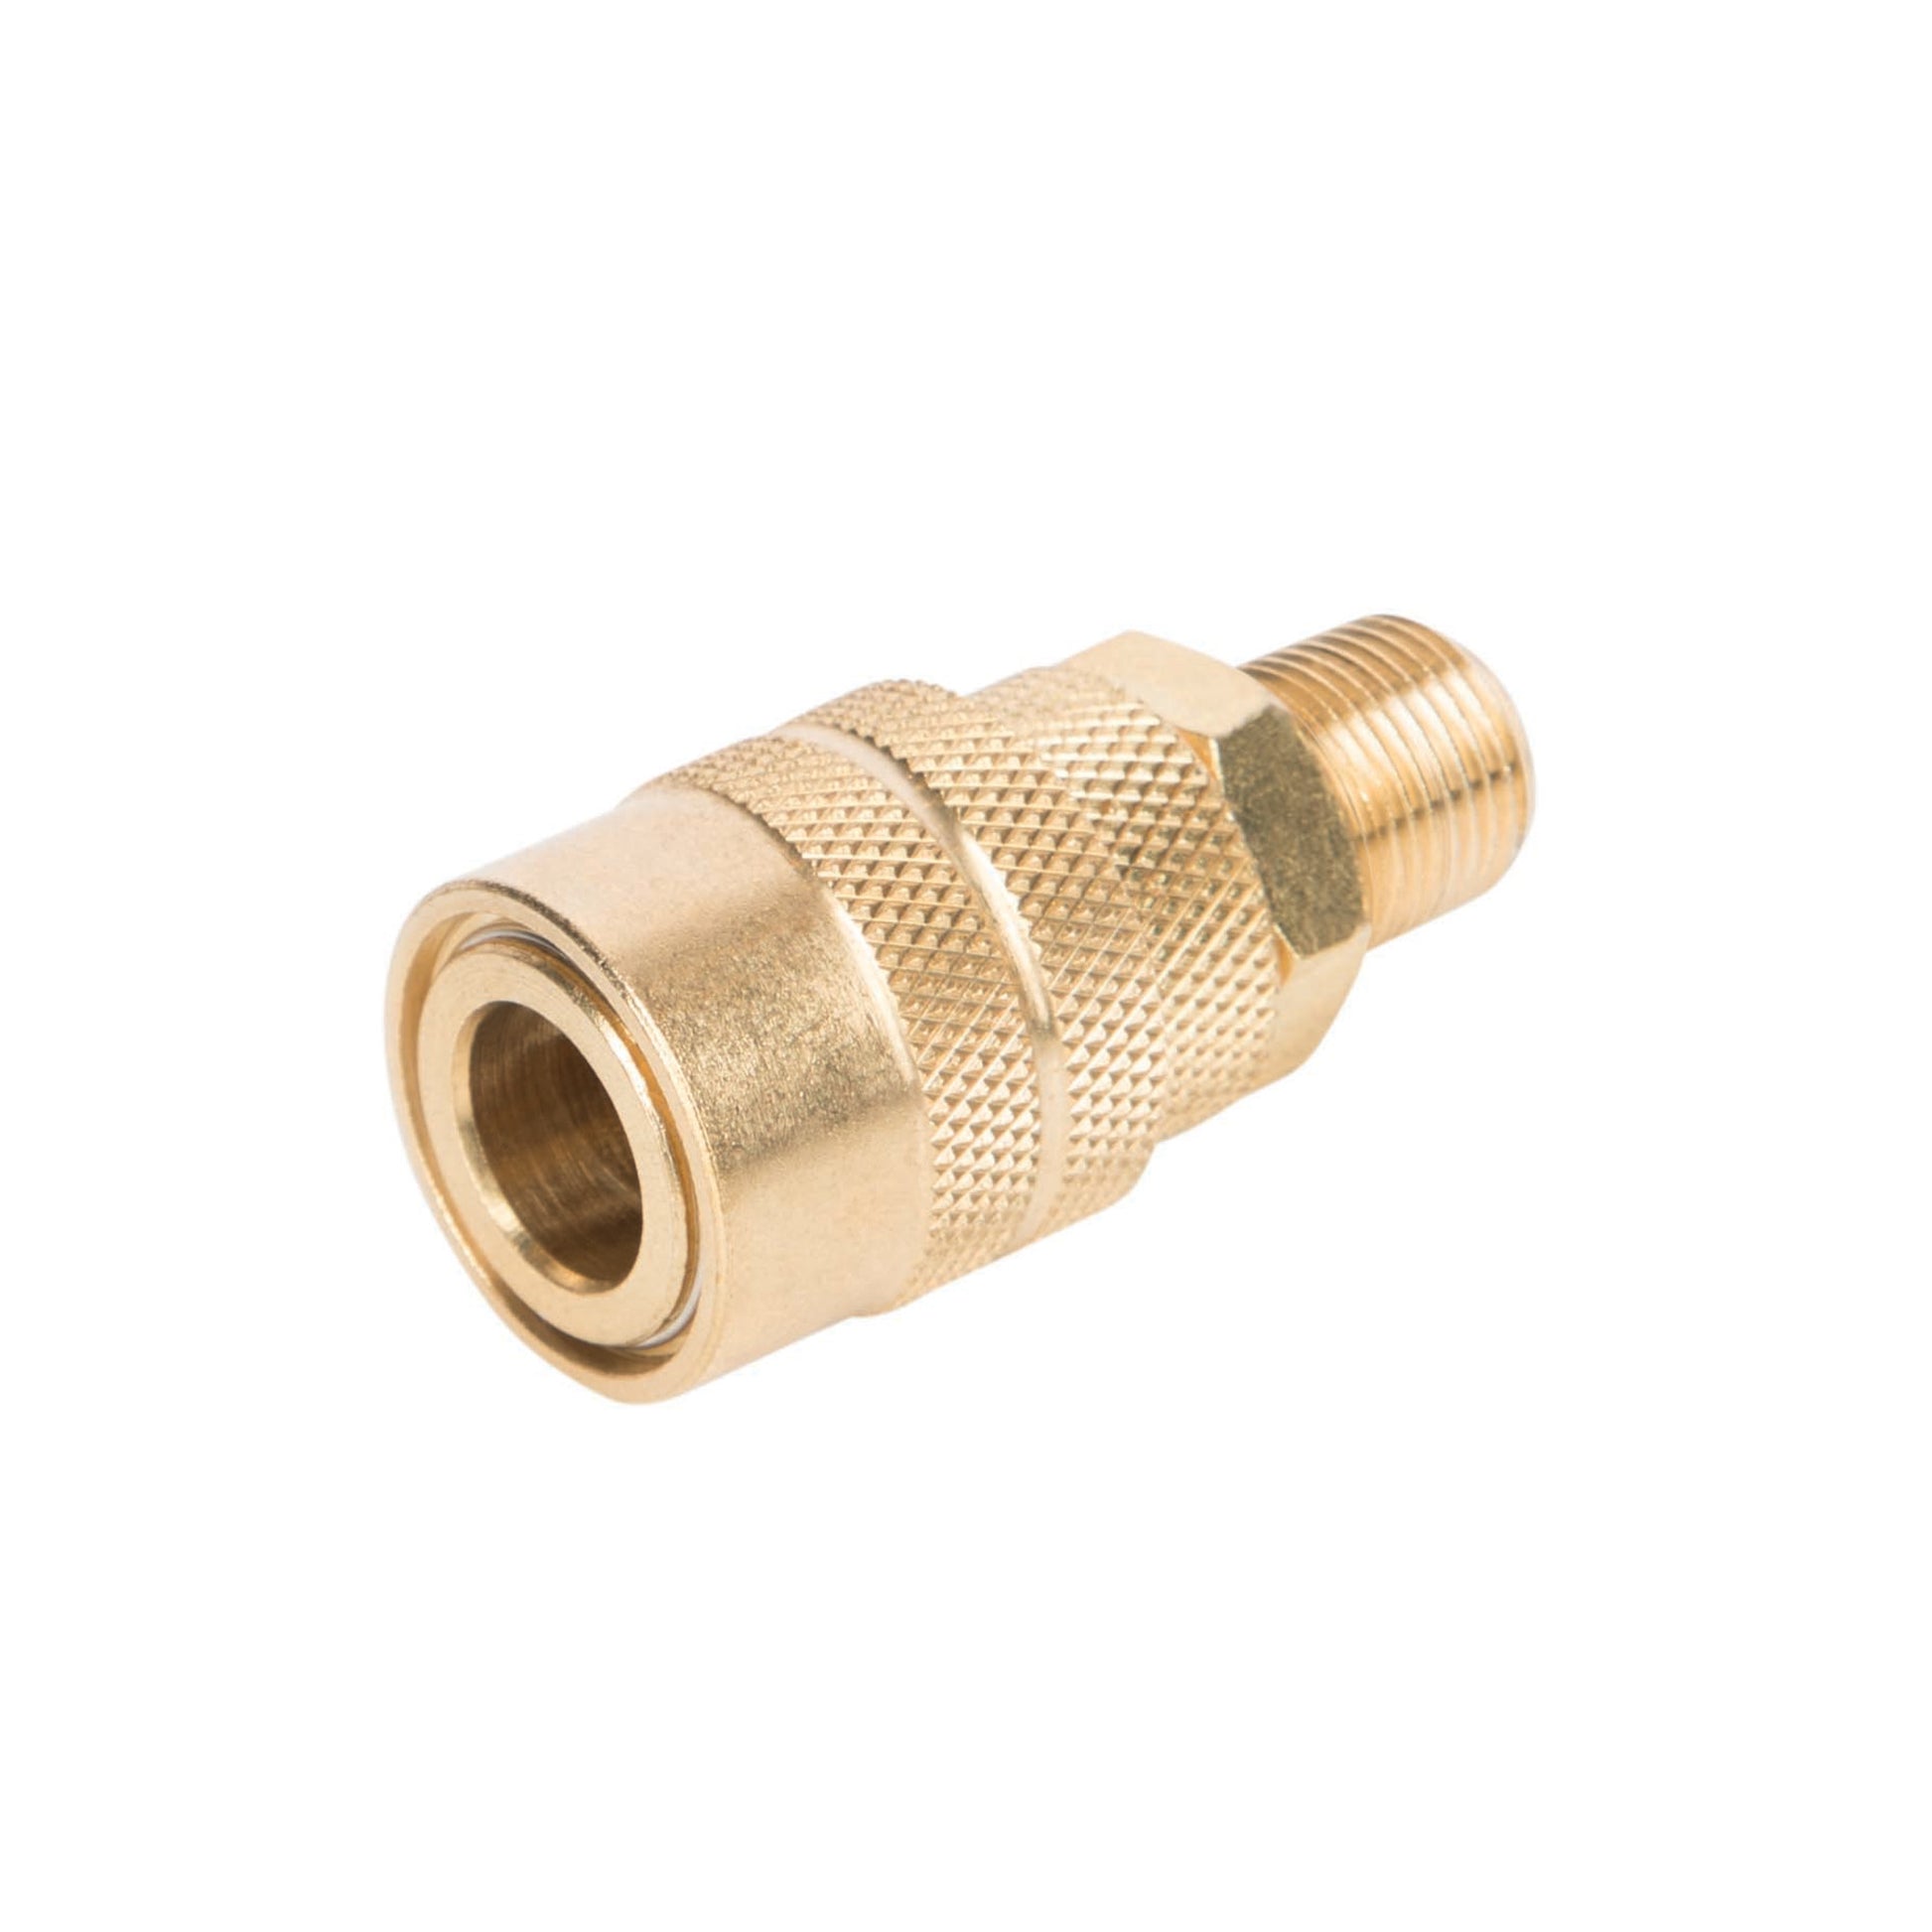 Steelman 1/4-Inch Brass Coupler With 1/4-In Male Npt Threads, 10